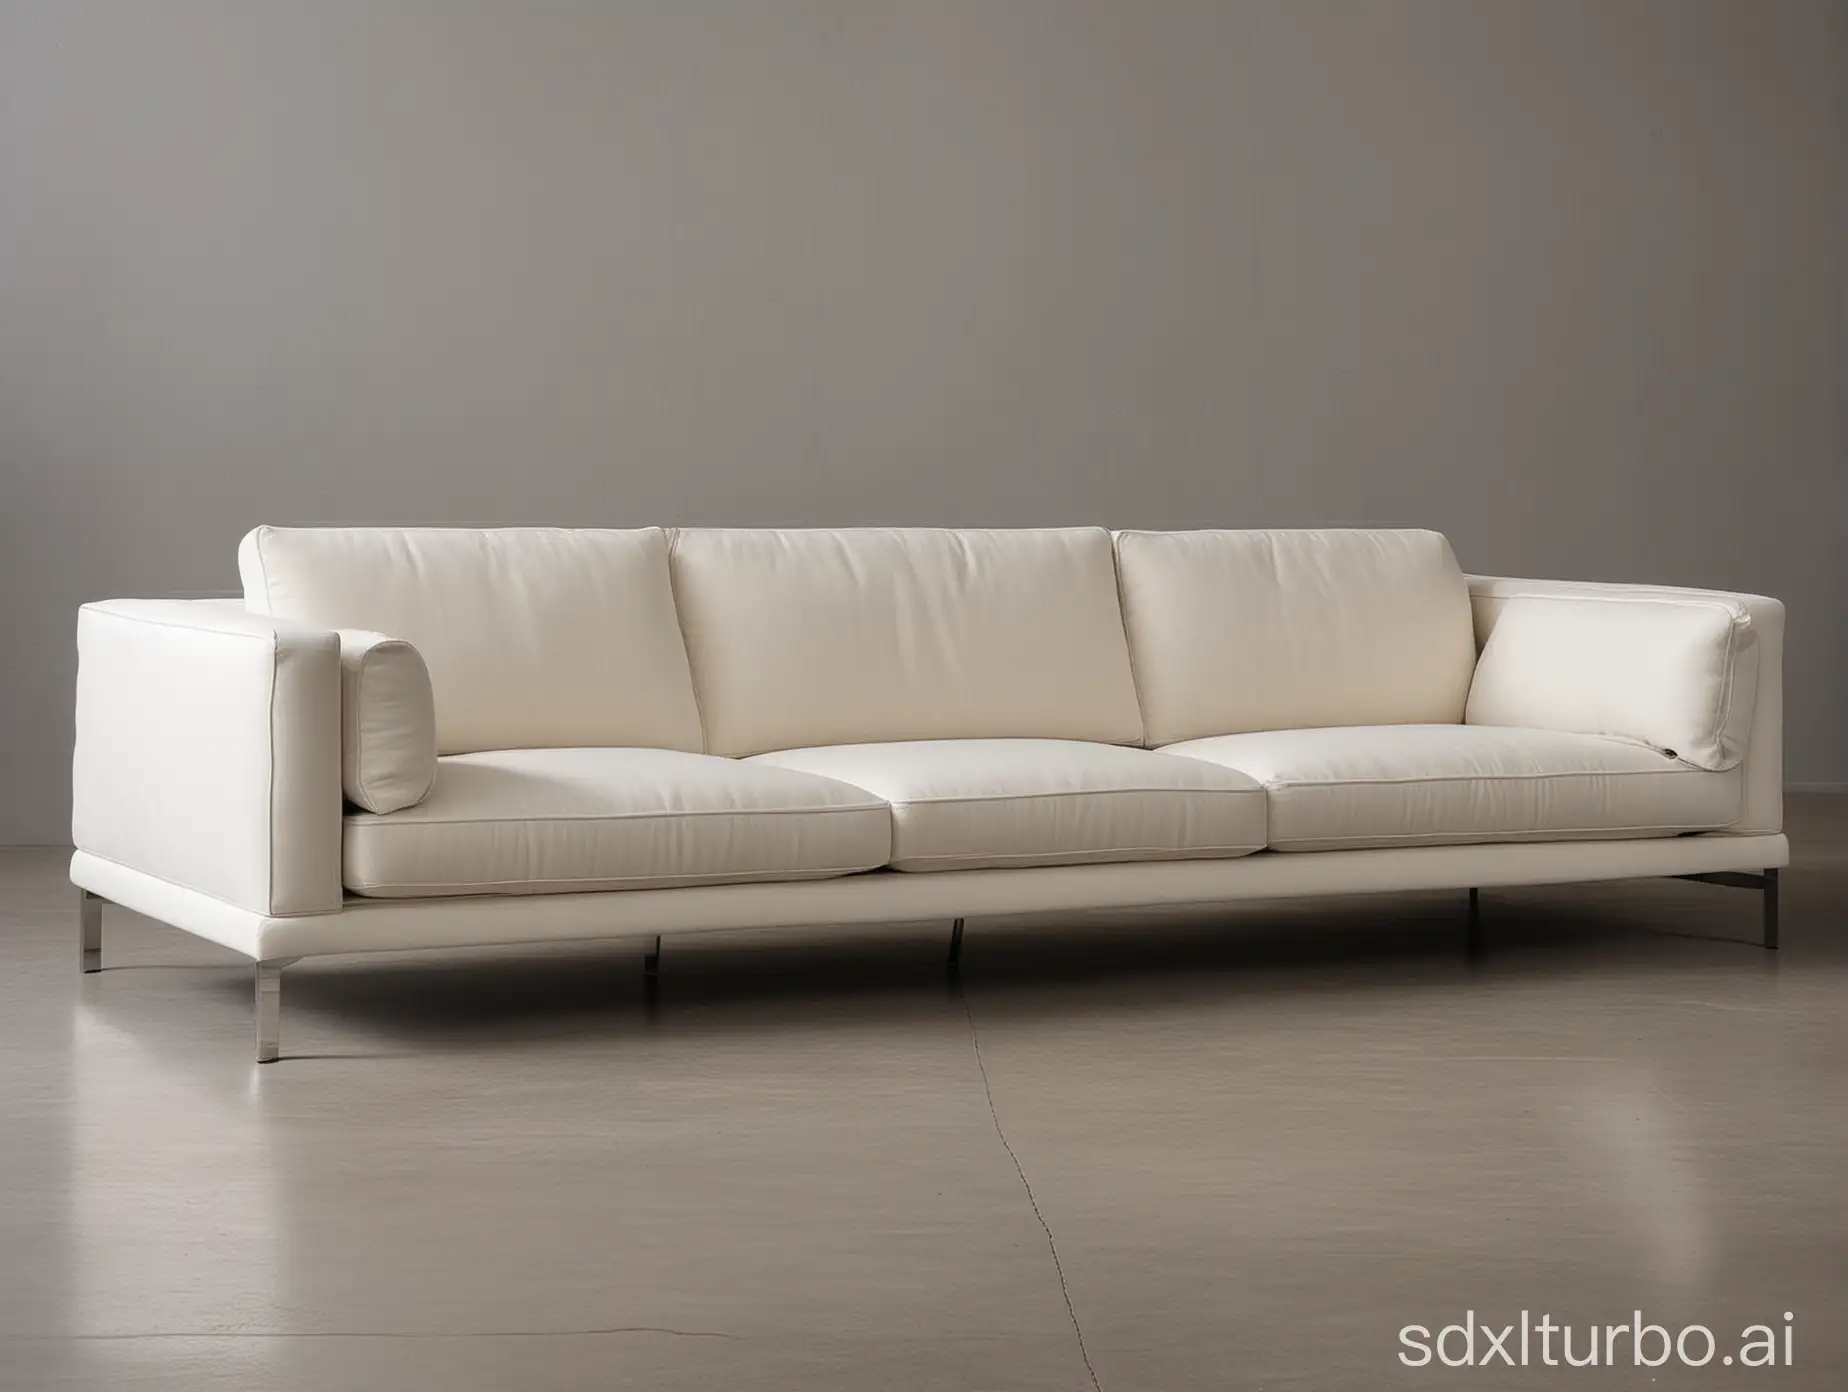 Italian-Minimalist-Modern-Sofa-Sleek-Design-for-Contemporary-Living-Spaces